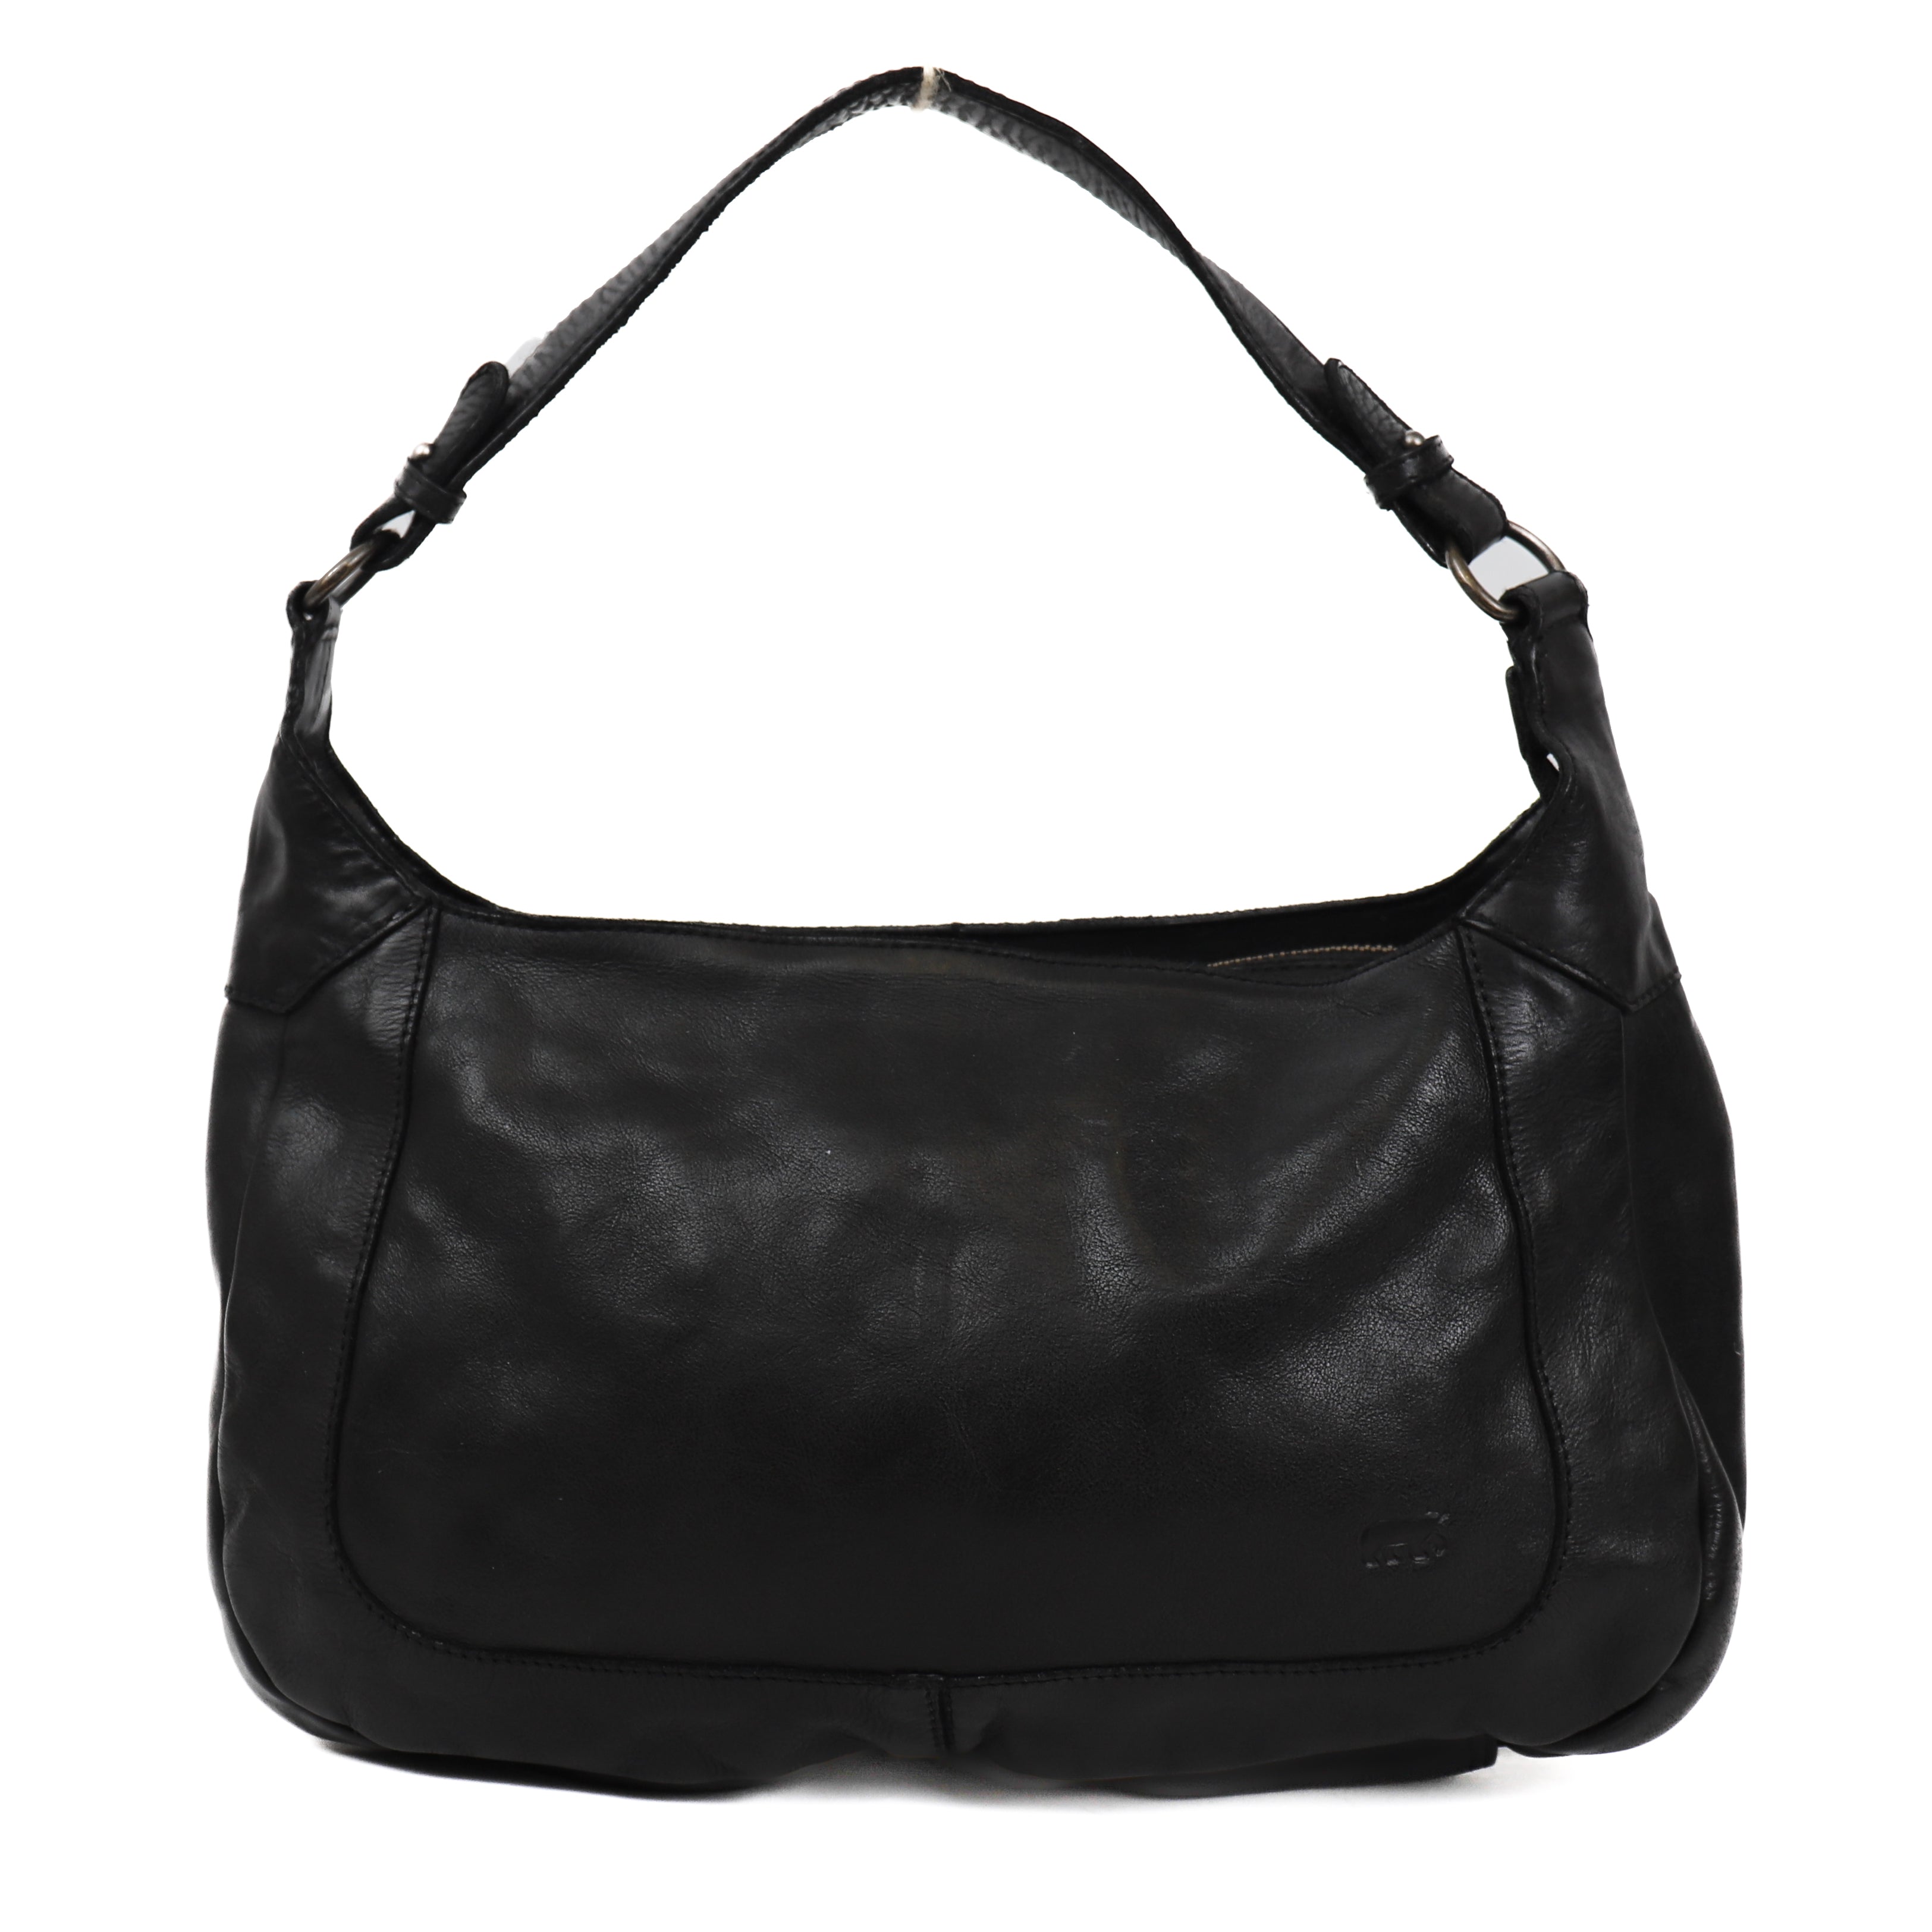 Hand/shoulder bag 'Monique' black